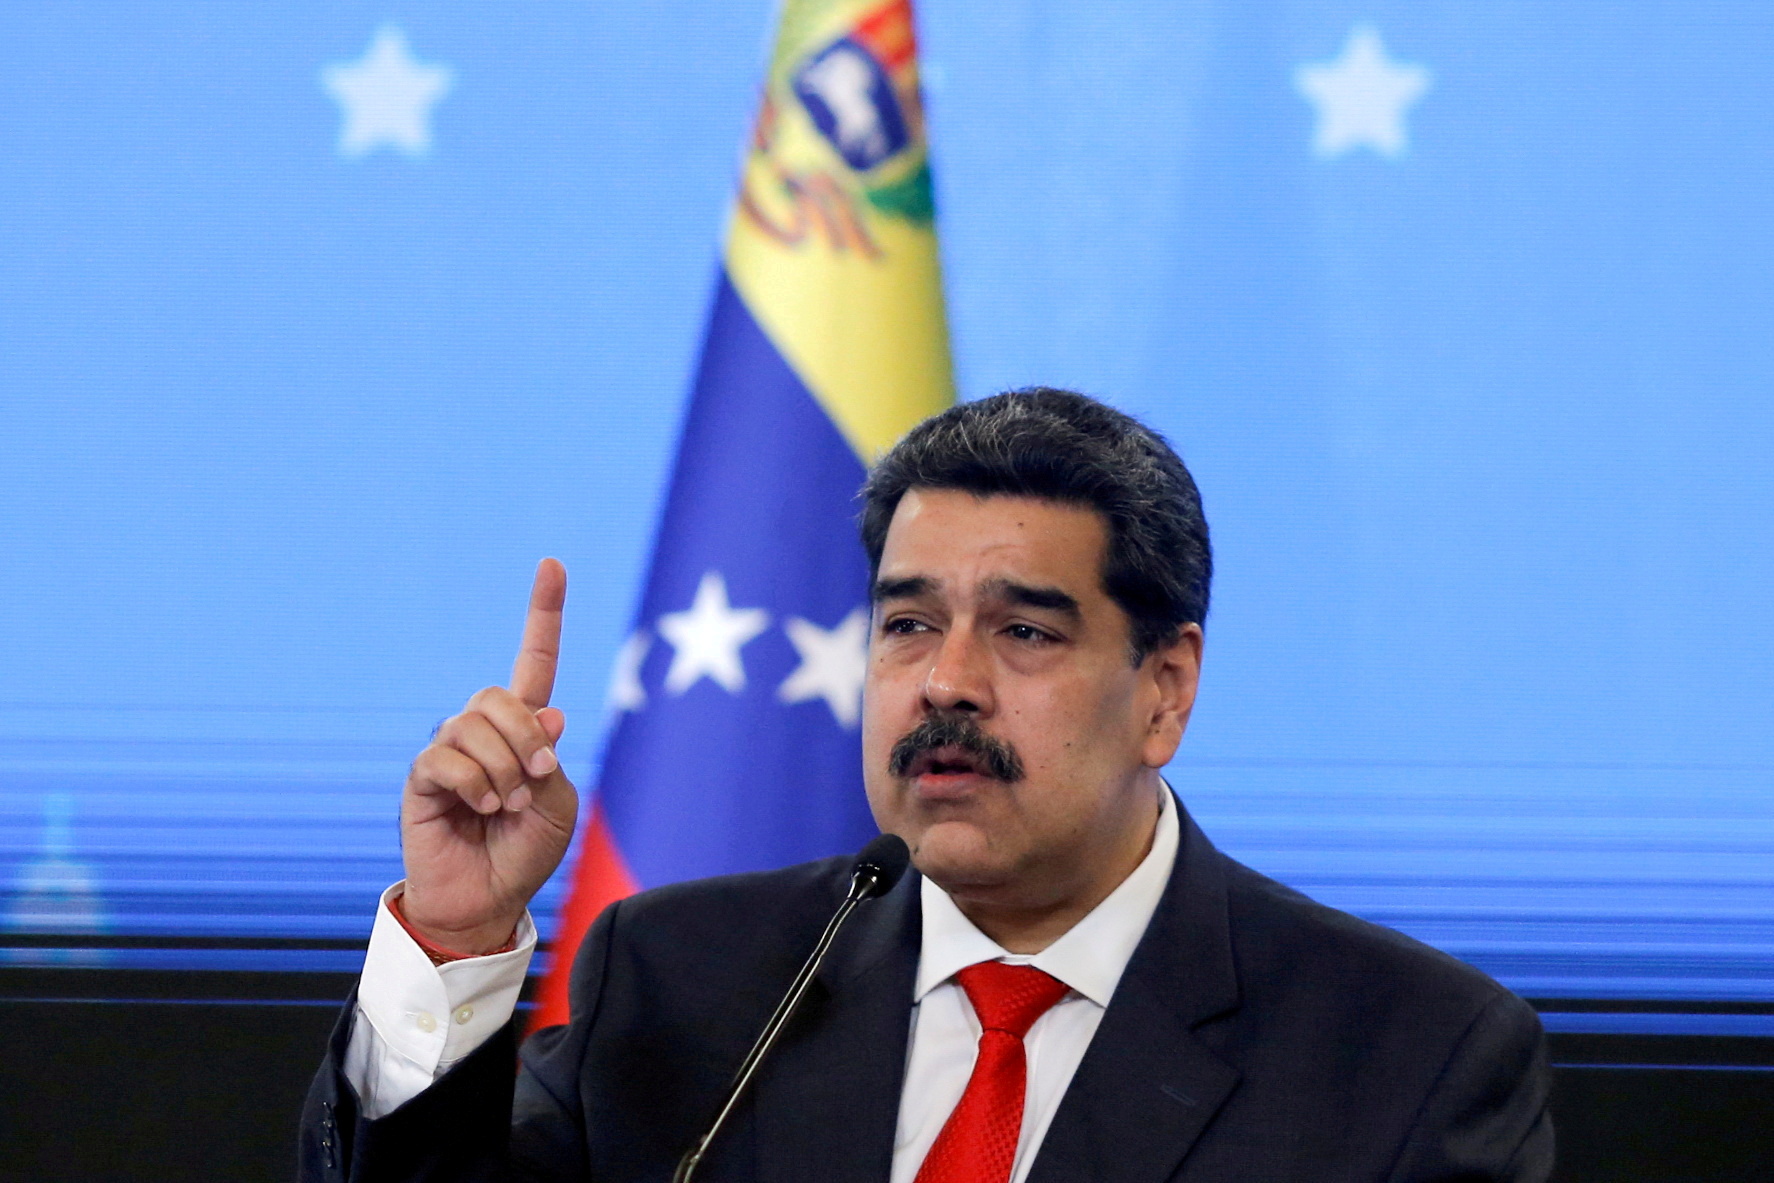 Venezuelan President Nicolas Maduro holds a news conference in Caracas